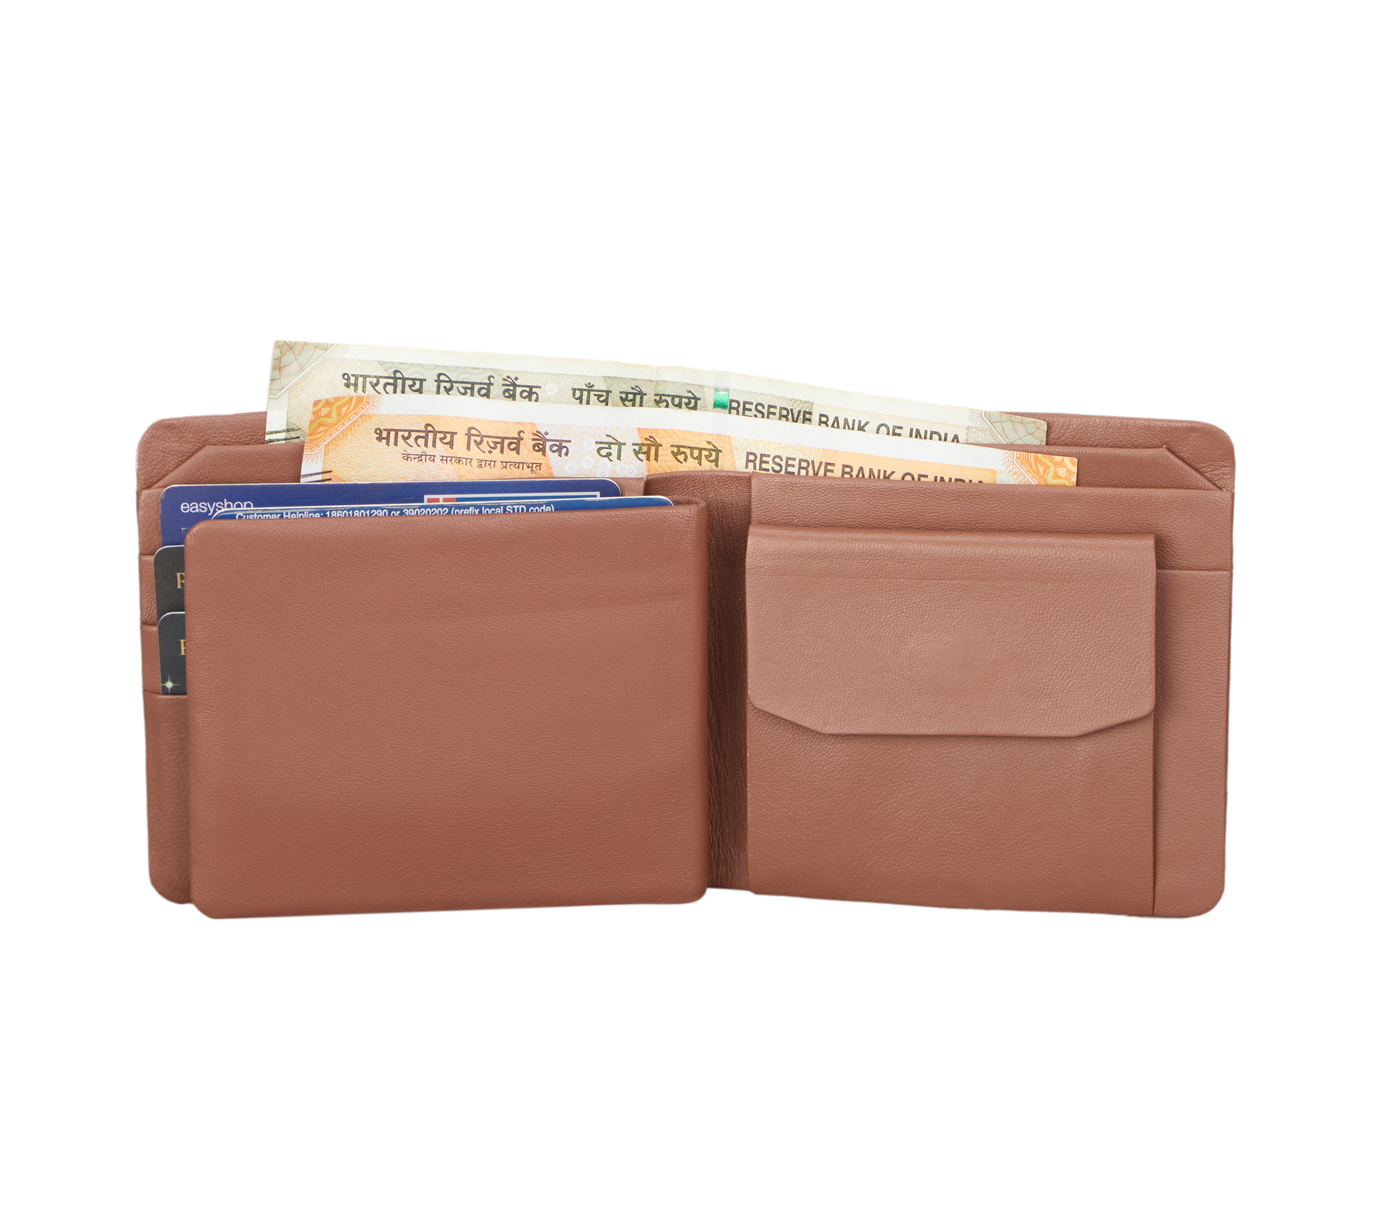 Wallet-Almeda-Men's bifold wallet with coin pocket in Genuine Leather - Tan